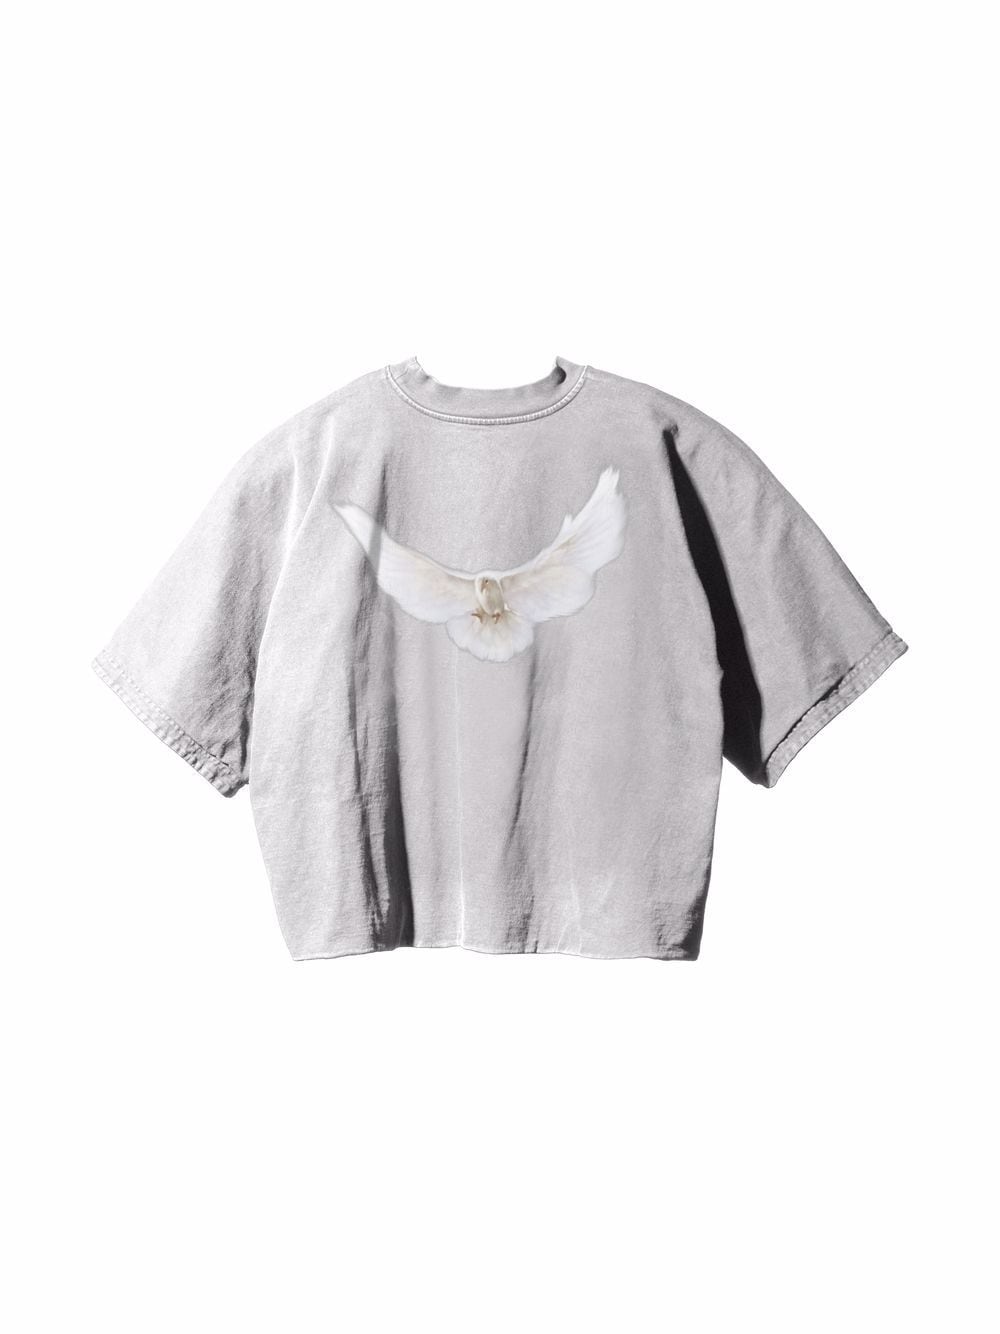 Yeezy Gap Engineered by Balenciaga Dove No Seam T-shirt White 